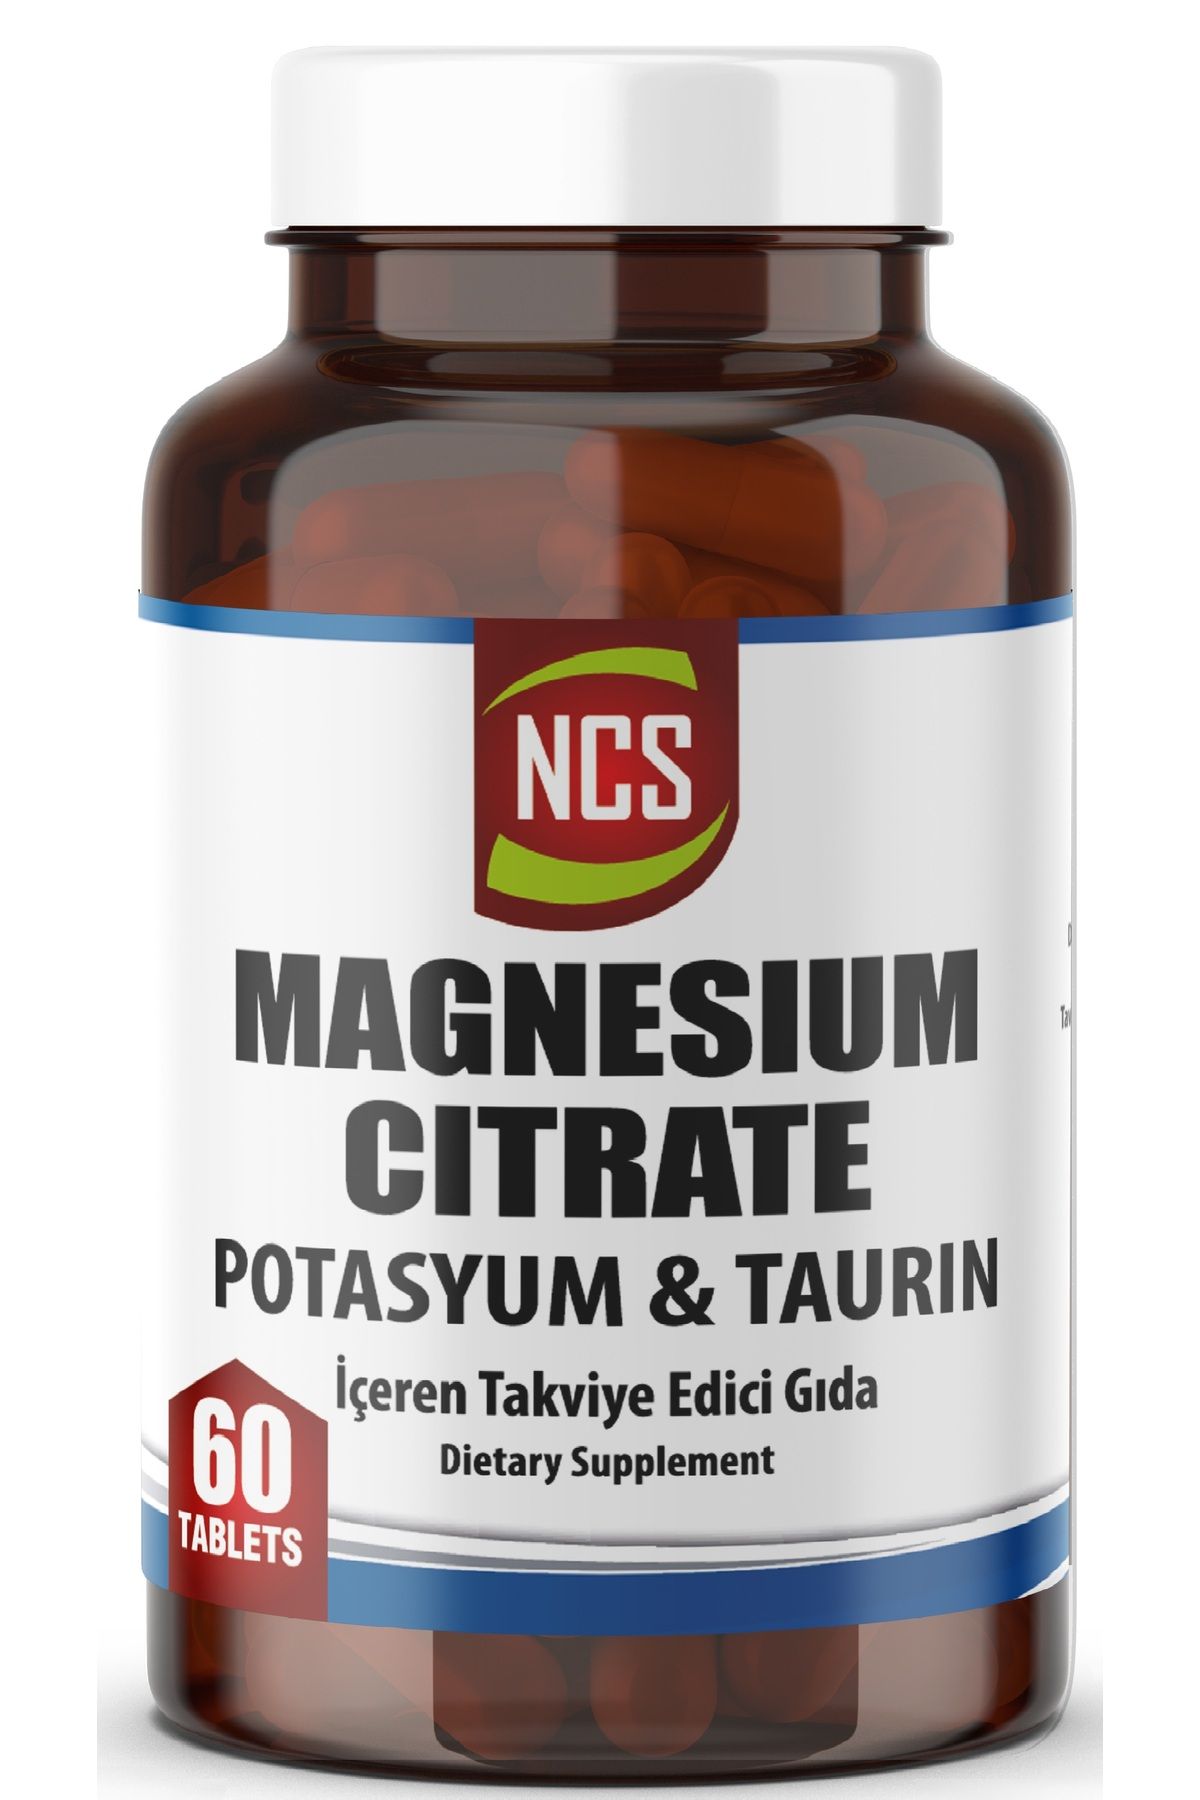 Ncs Magnezyum Sitrat 4 Lü Form 60 Tablet (POTASYUM KALİUM) & Vitamin B6 Magnesium Citrate Taurin